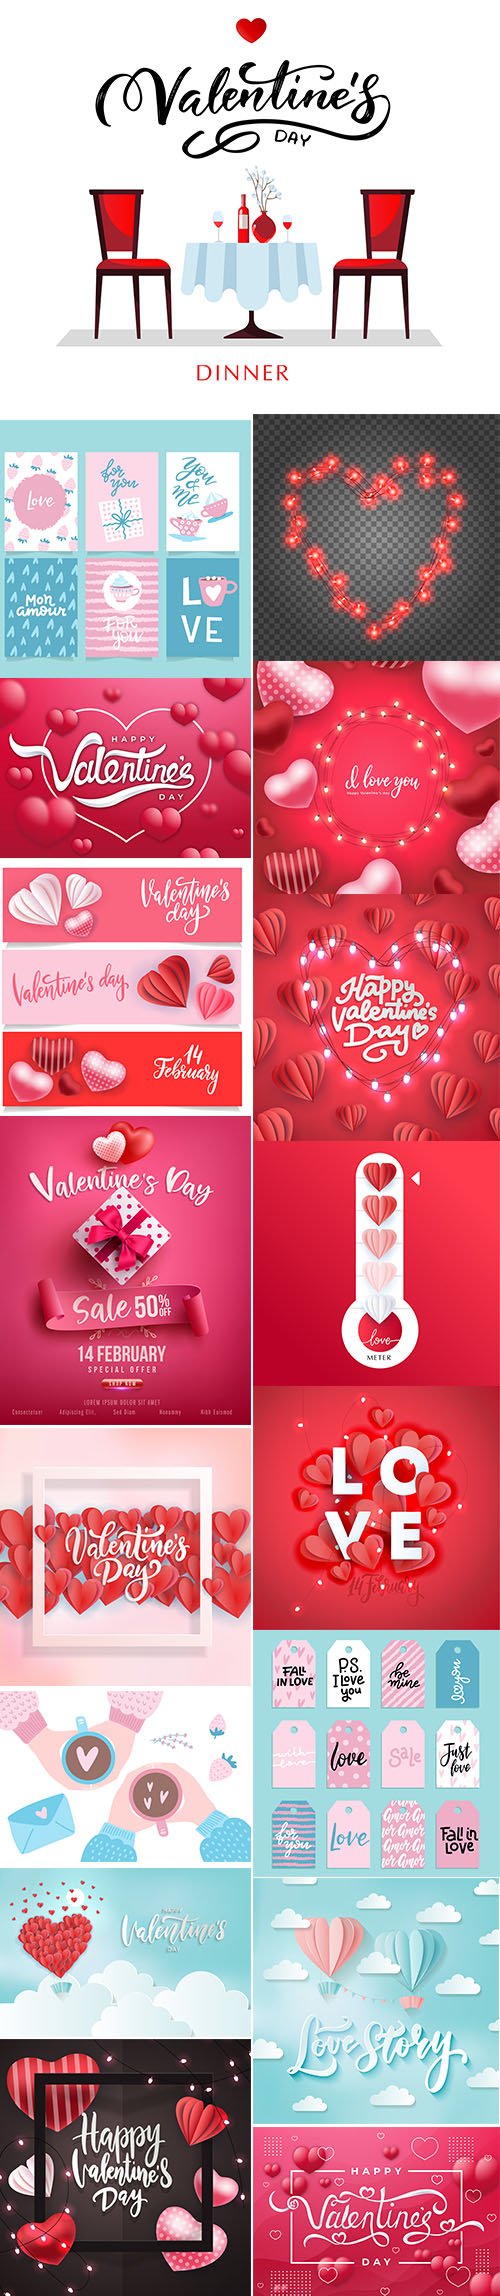 Set of Romantic Valentines Day Illustrations Vol 7